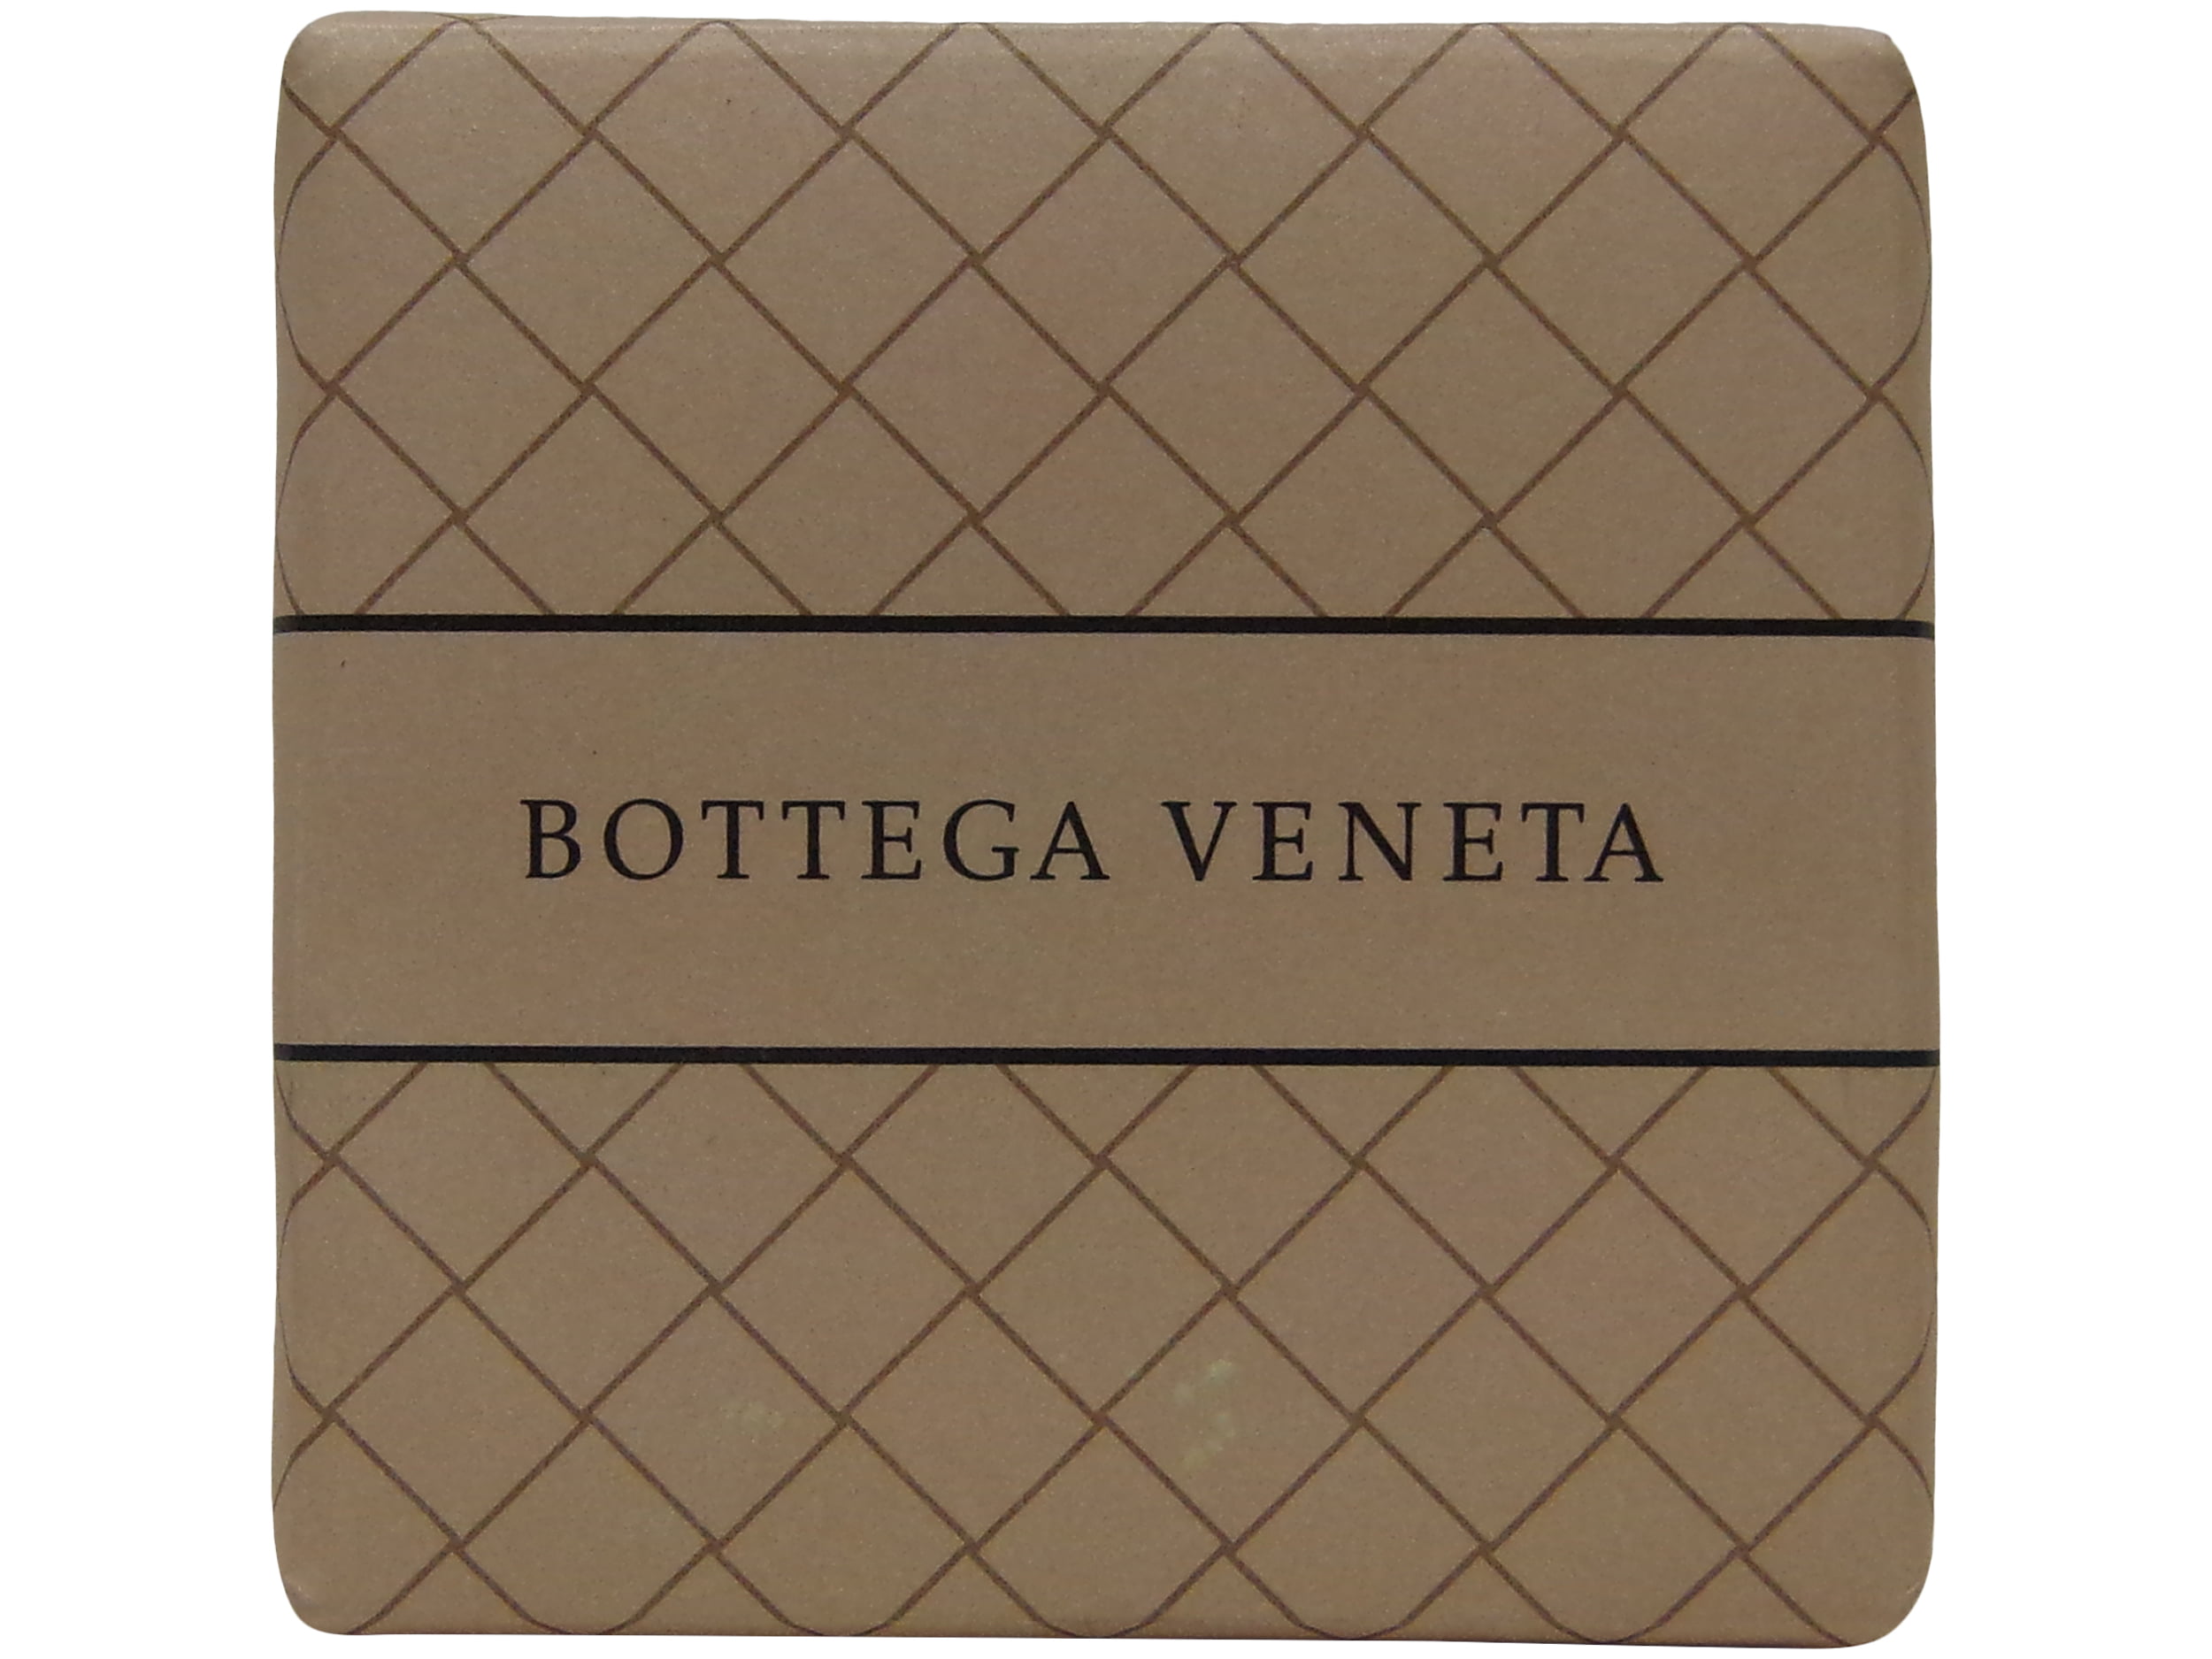 Bottega Veneta Soap lot of 4 each 1.7oz bars. Total of 6.8oz - Walmart.com